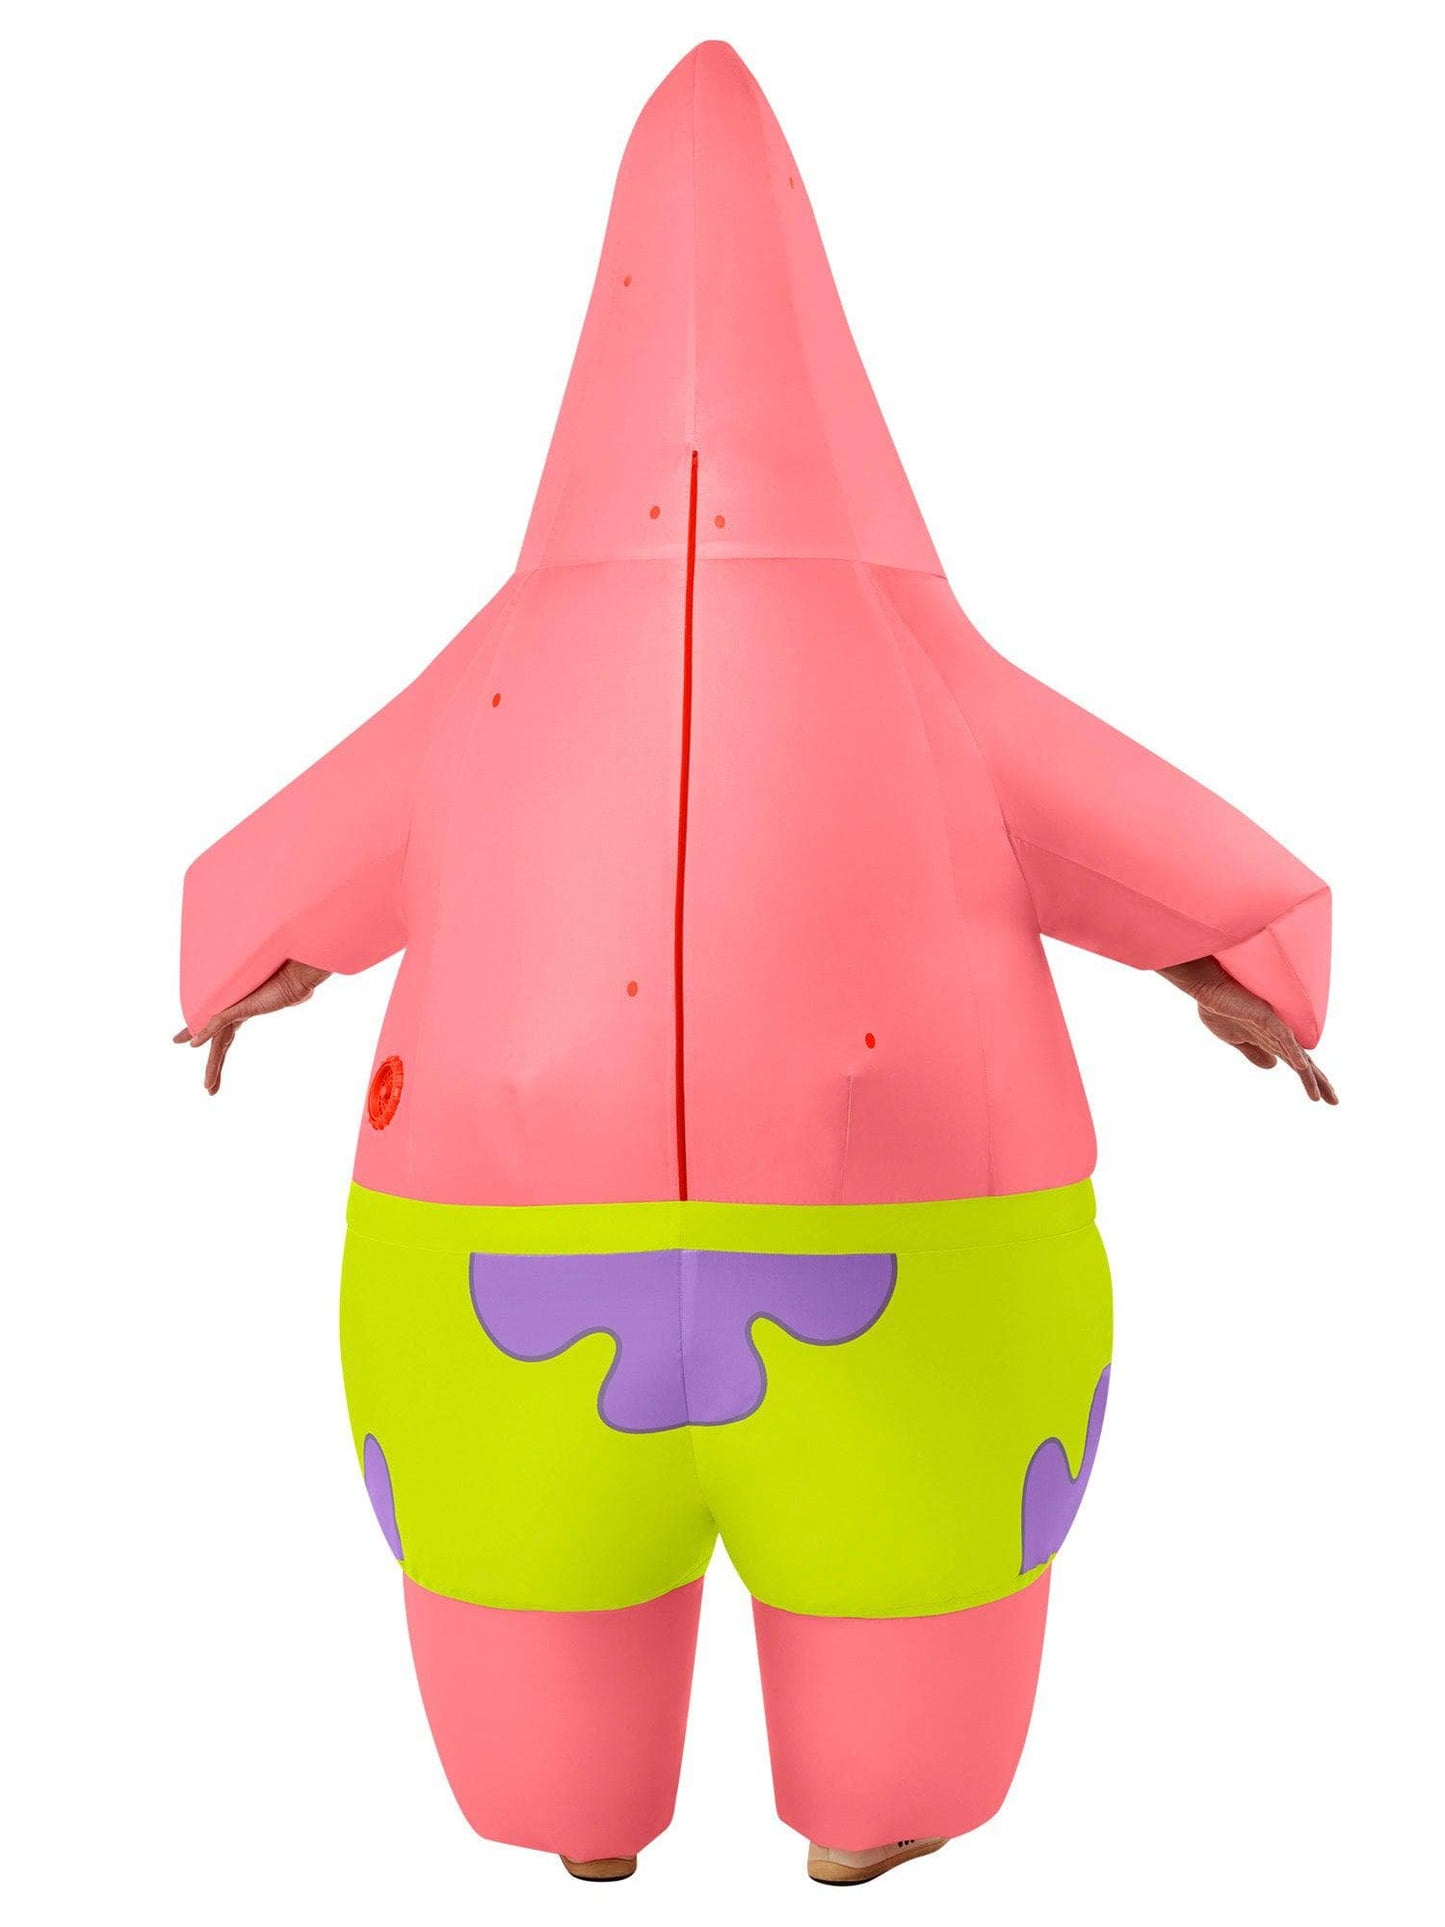 SpongeBob SquarePants Inflatable Patrick Star Adult Costume - Paramount Shop